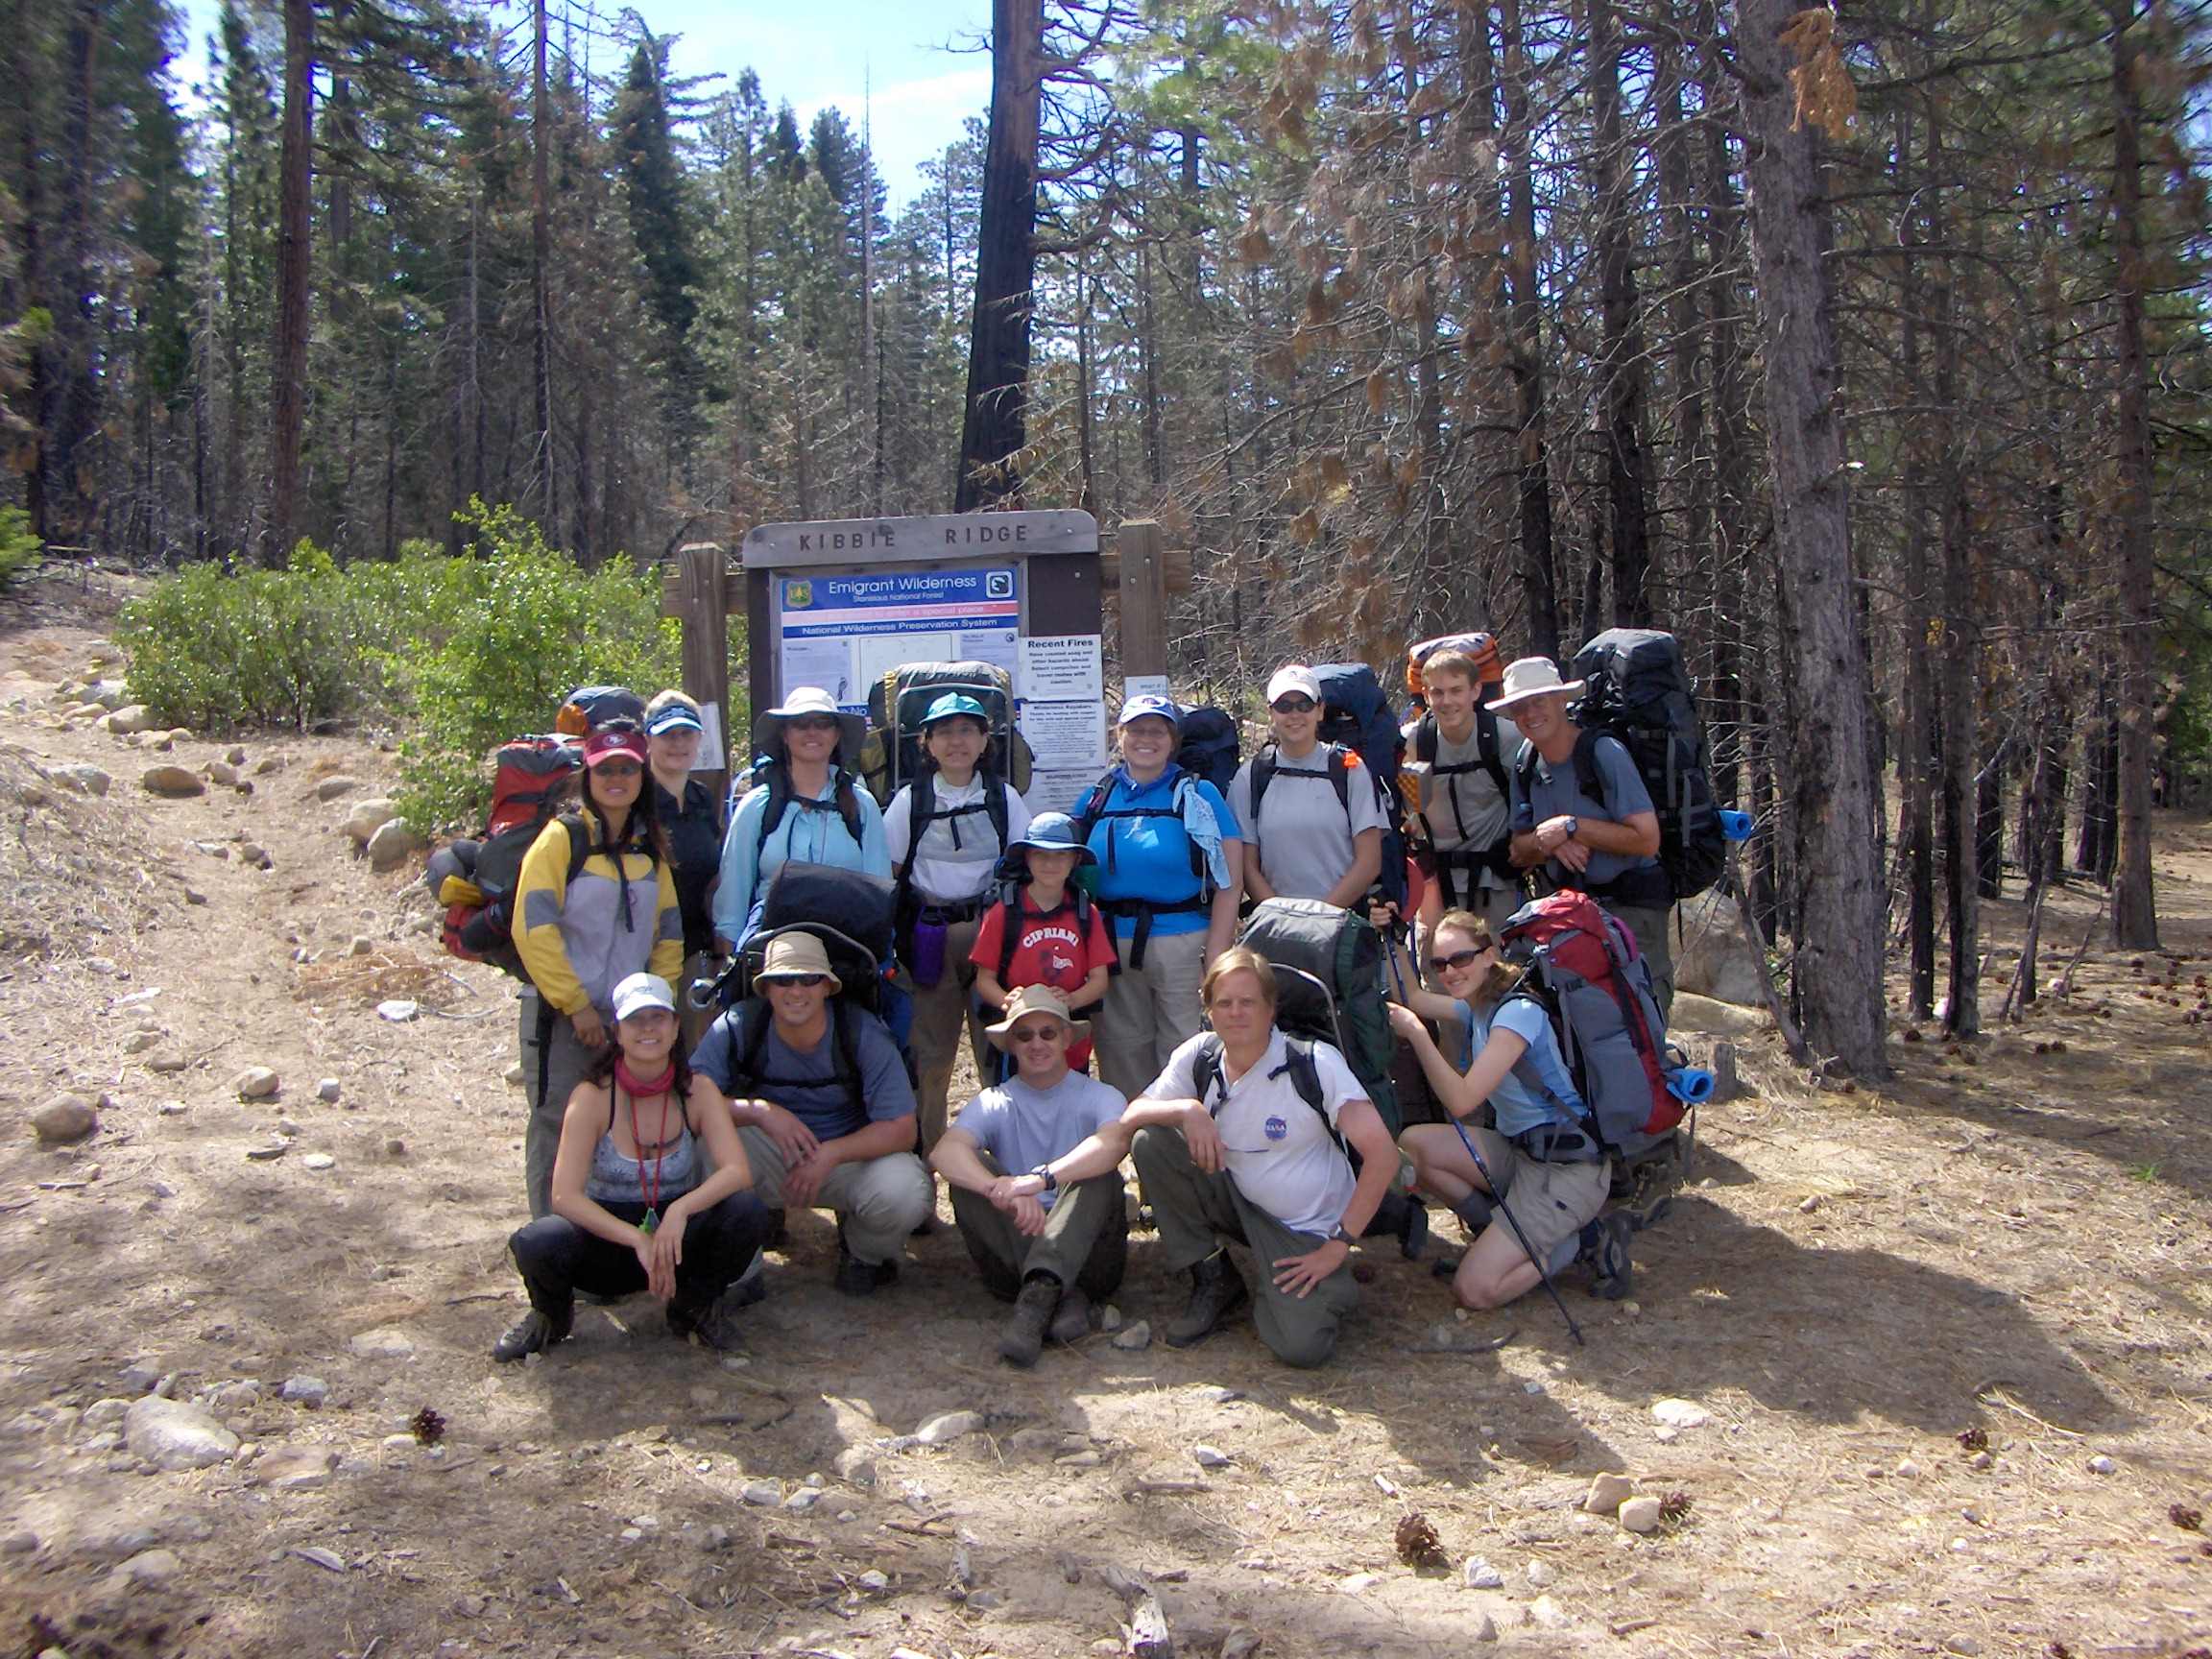 [Class members on a trip to Kibbe Lake, Yosemite National Park]